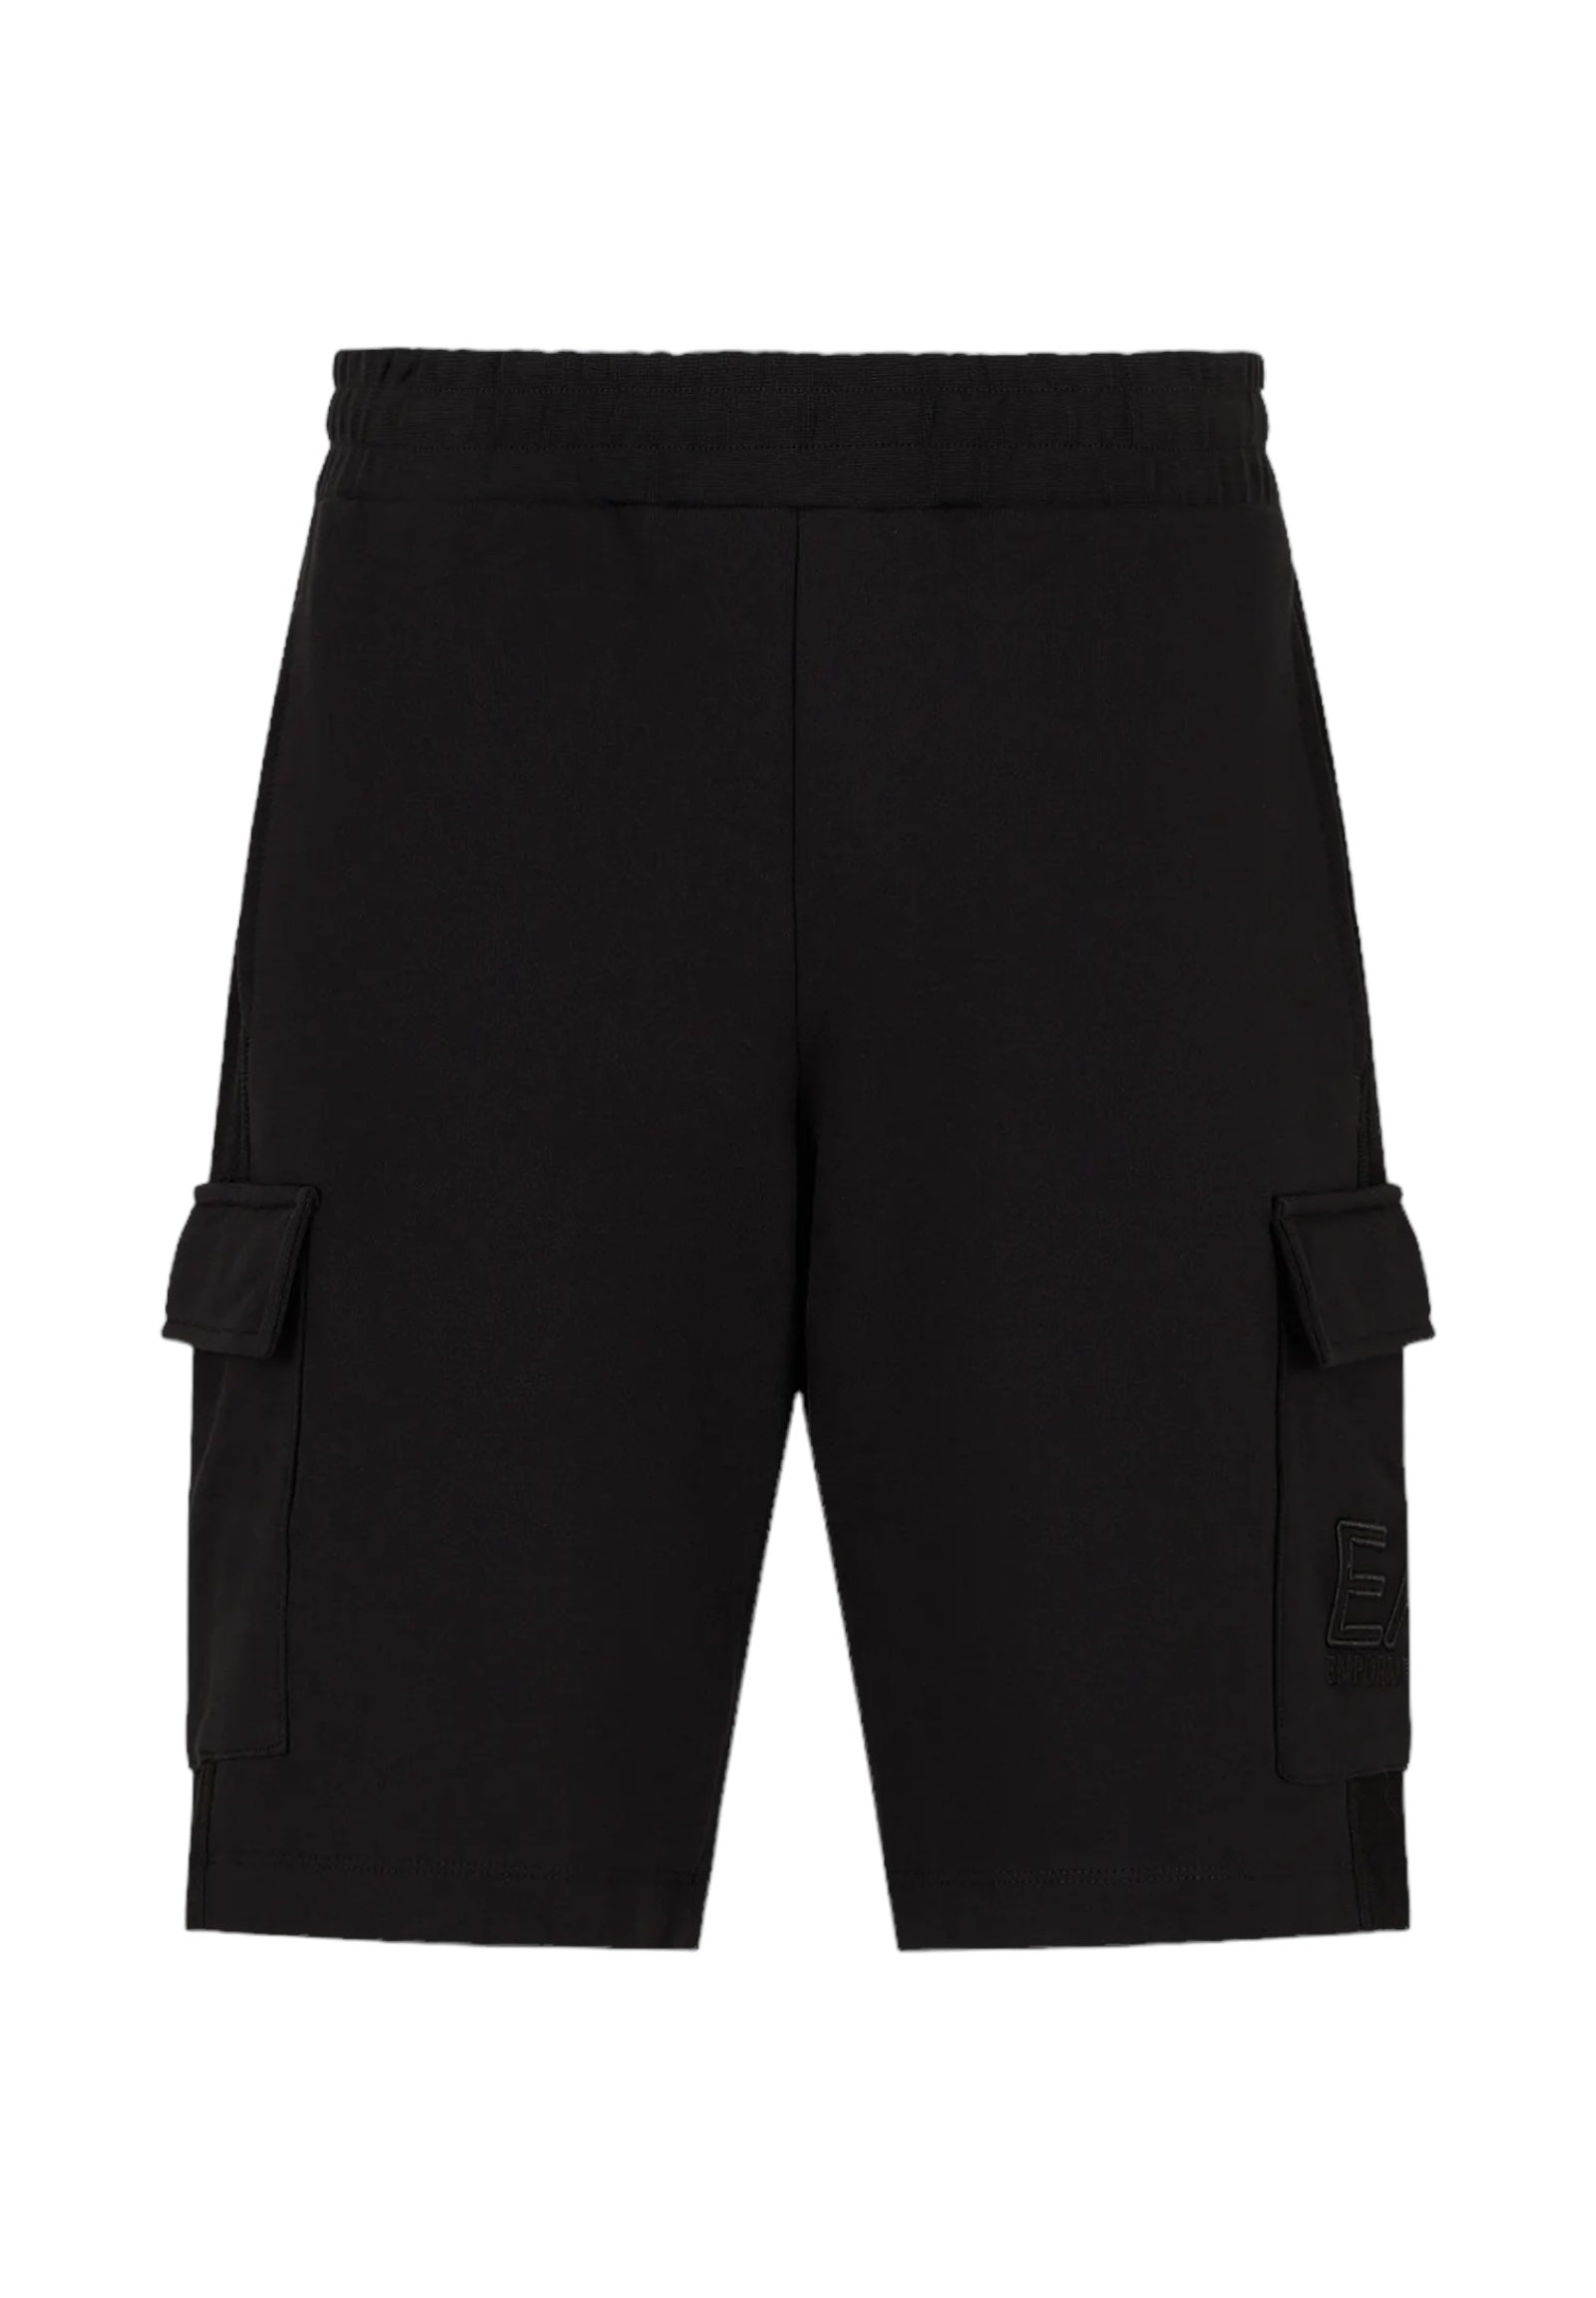 Bermuda shorts 3dus53 Black